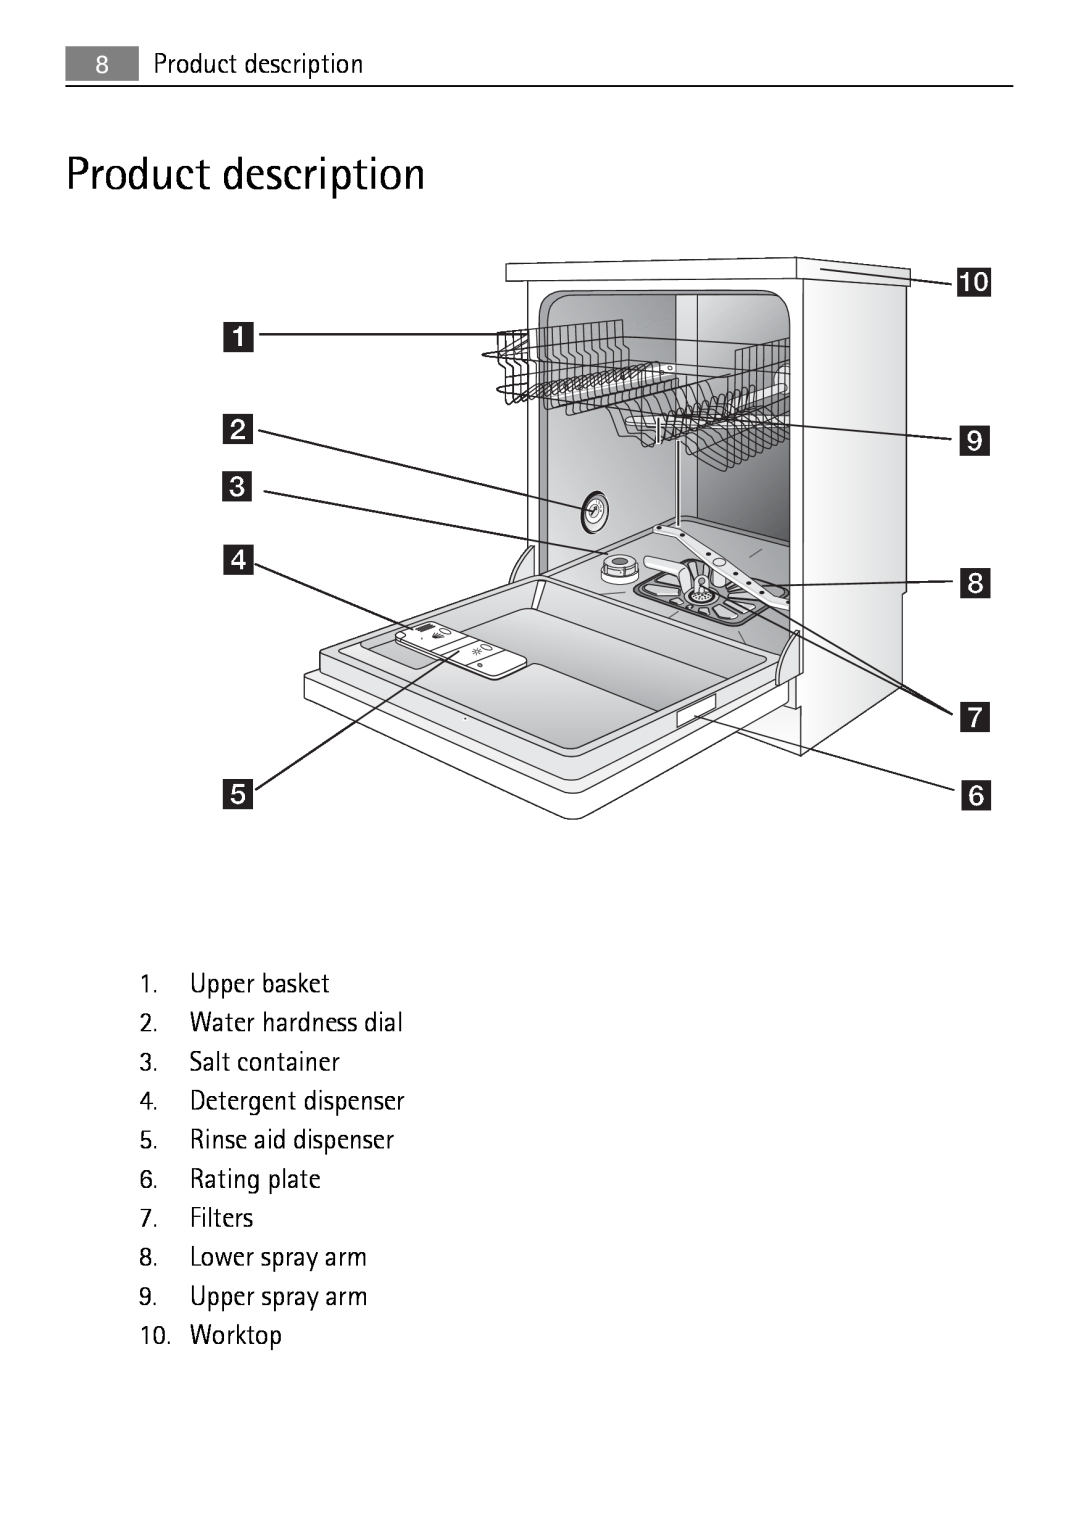 Electrolux 50870 user manual Product description, Upper basket 2. Water hardness dial 3. Salt container 